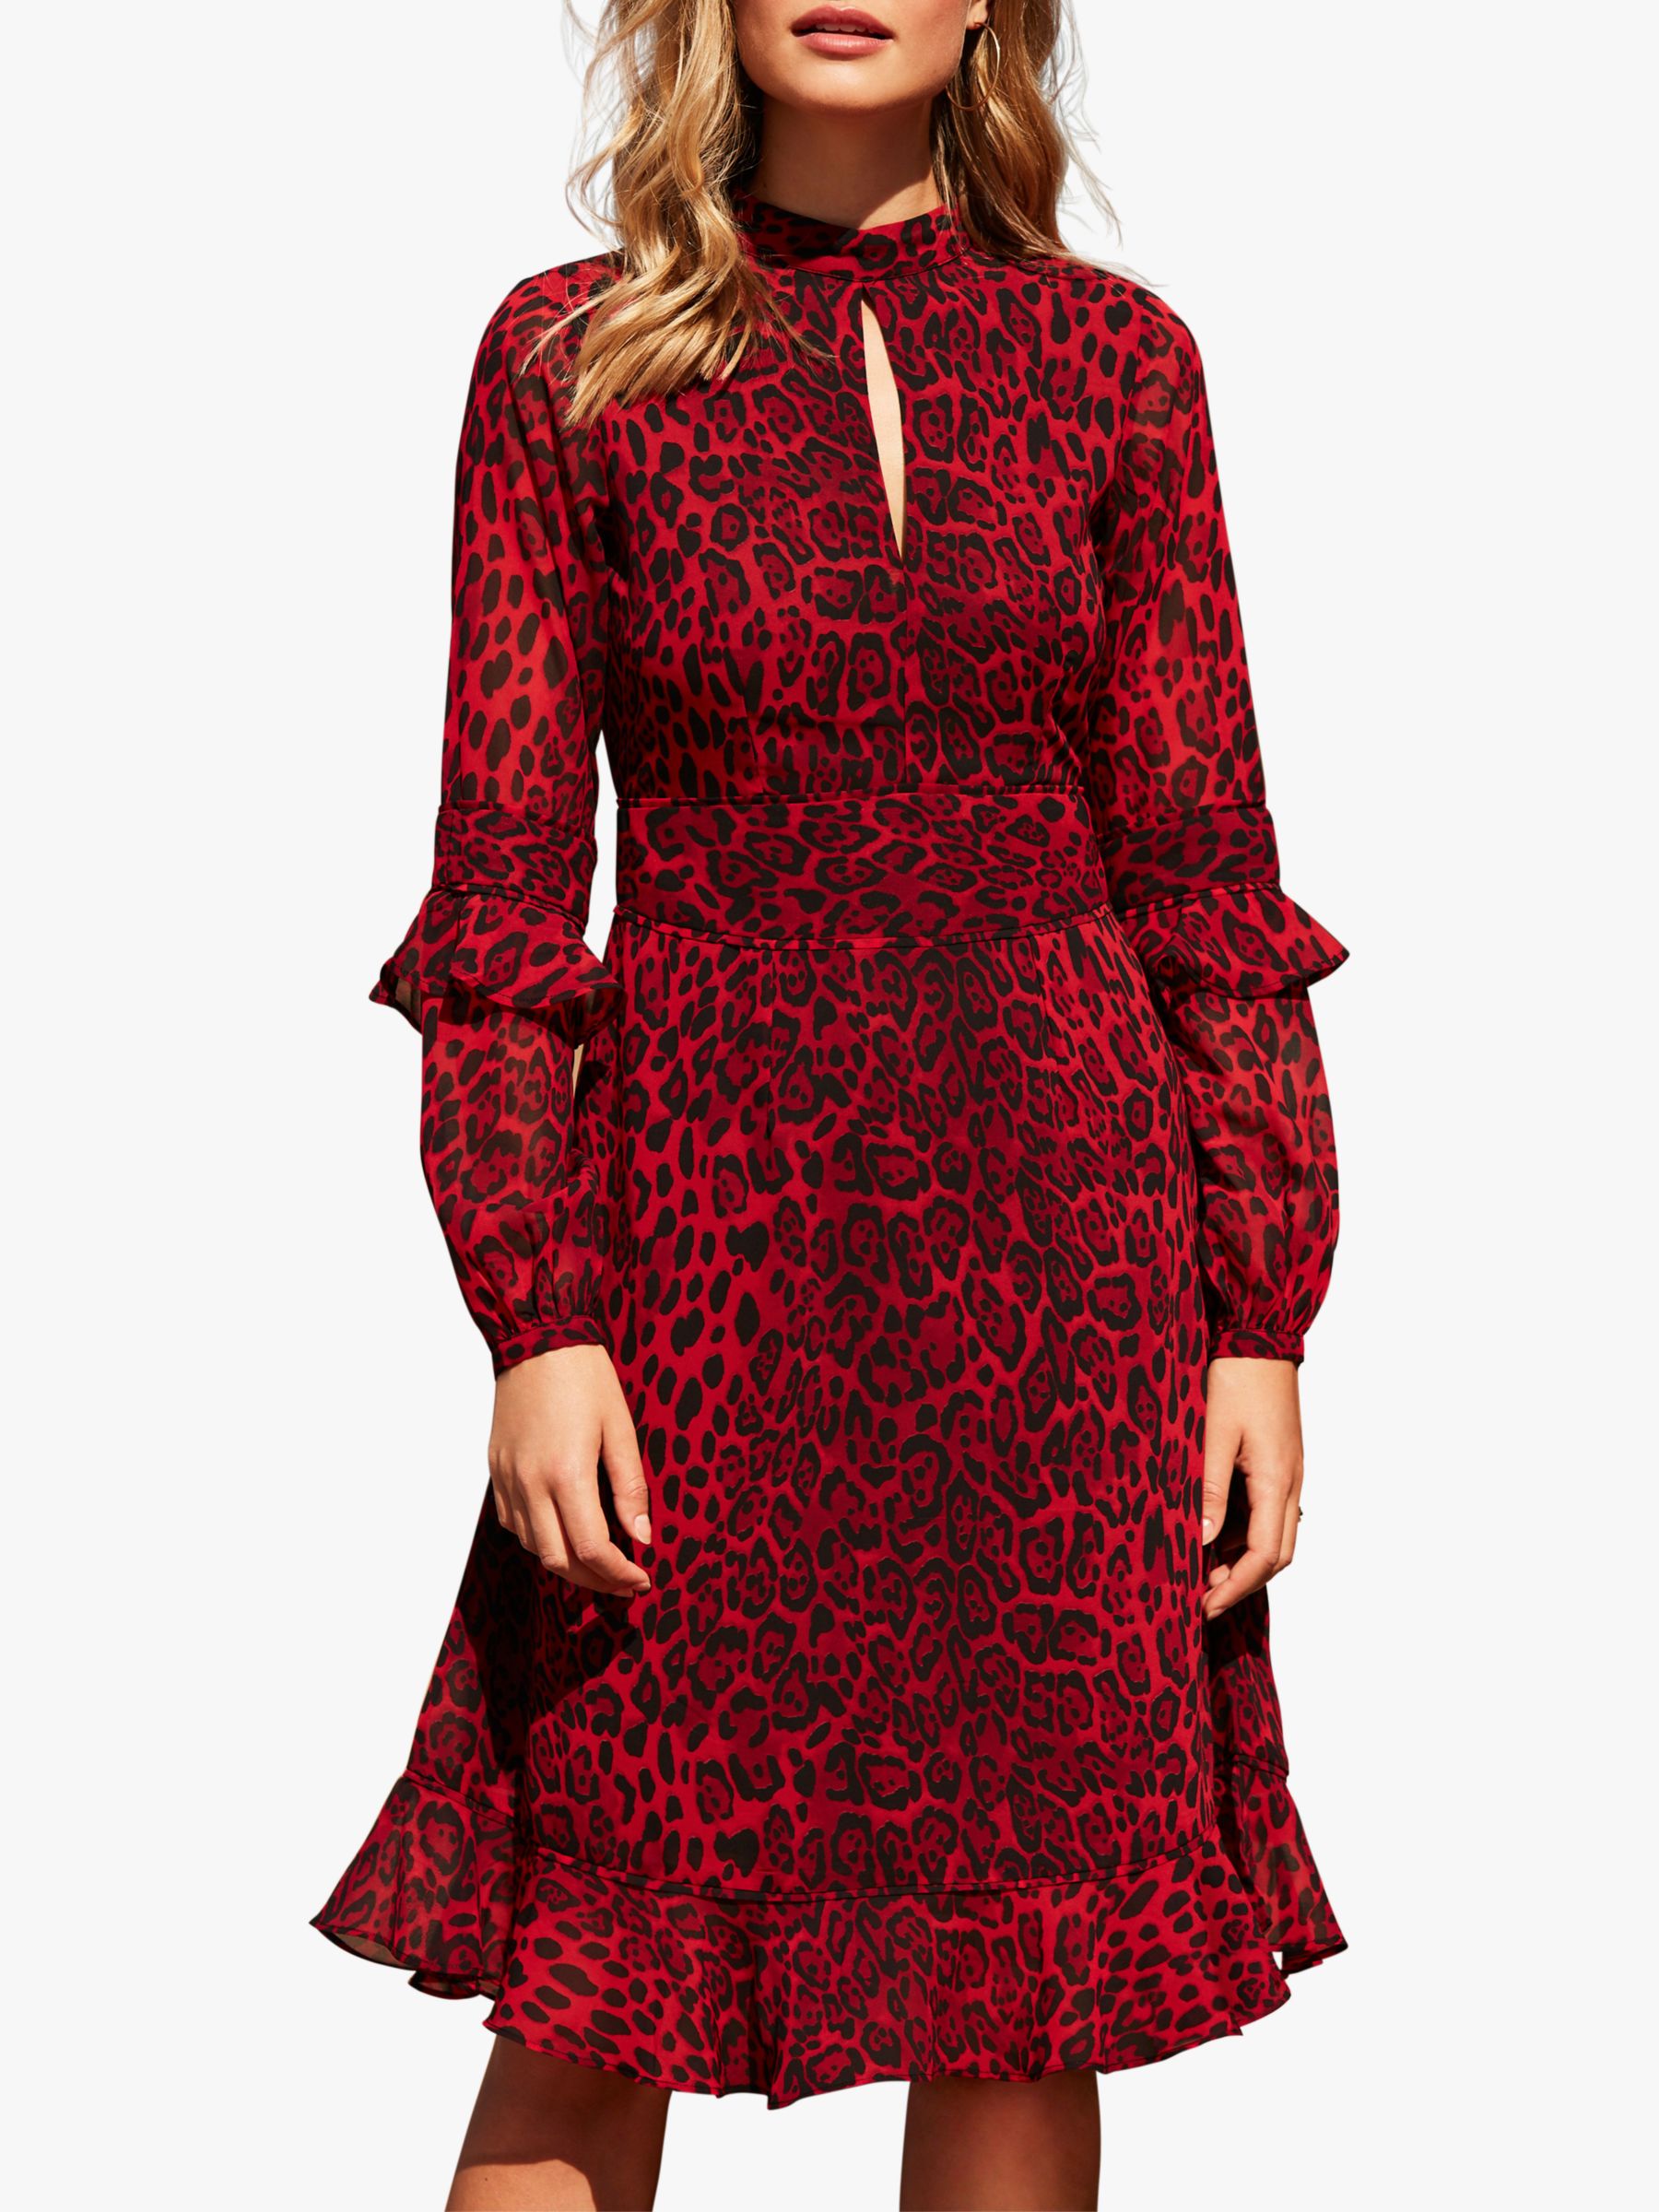 Sosandar Leopard Print Fit And Flare Ruffle Dress, Red